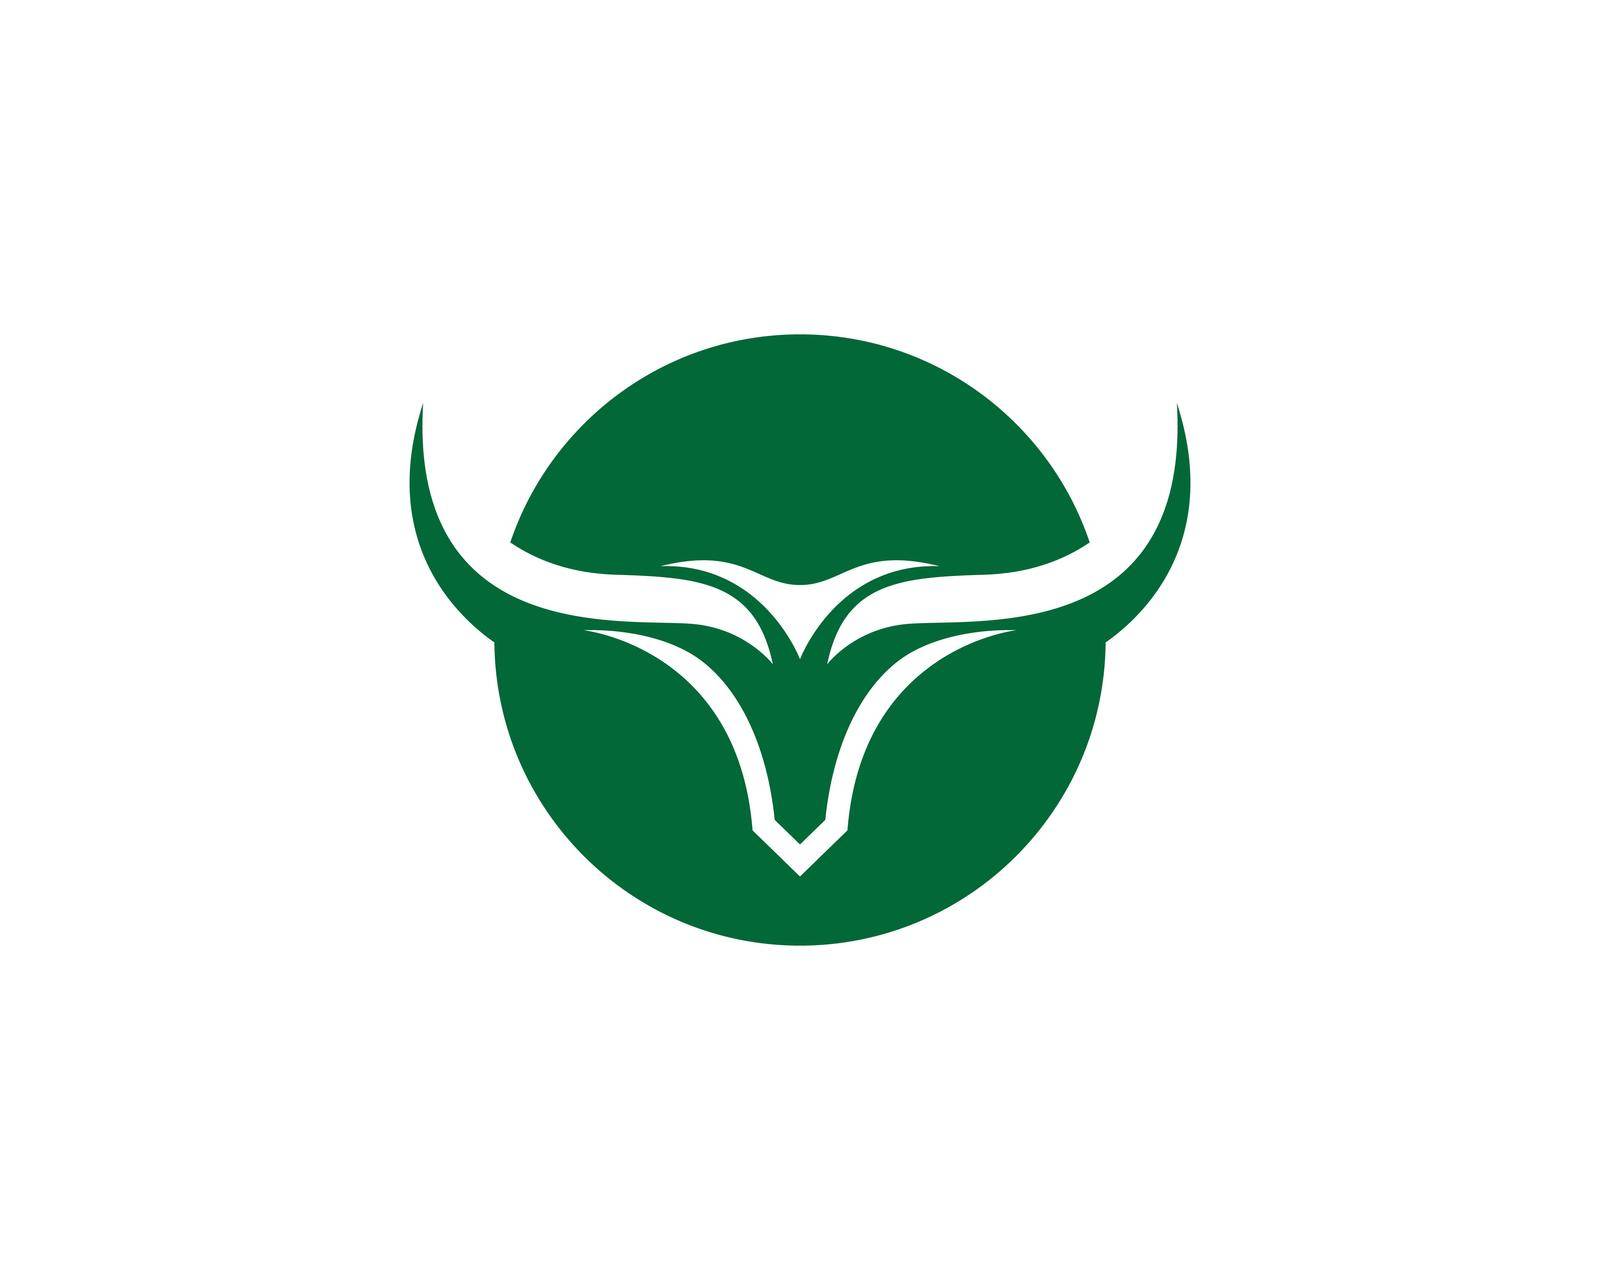 Bull logo template vector icon illustration by Attades19